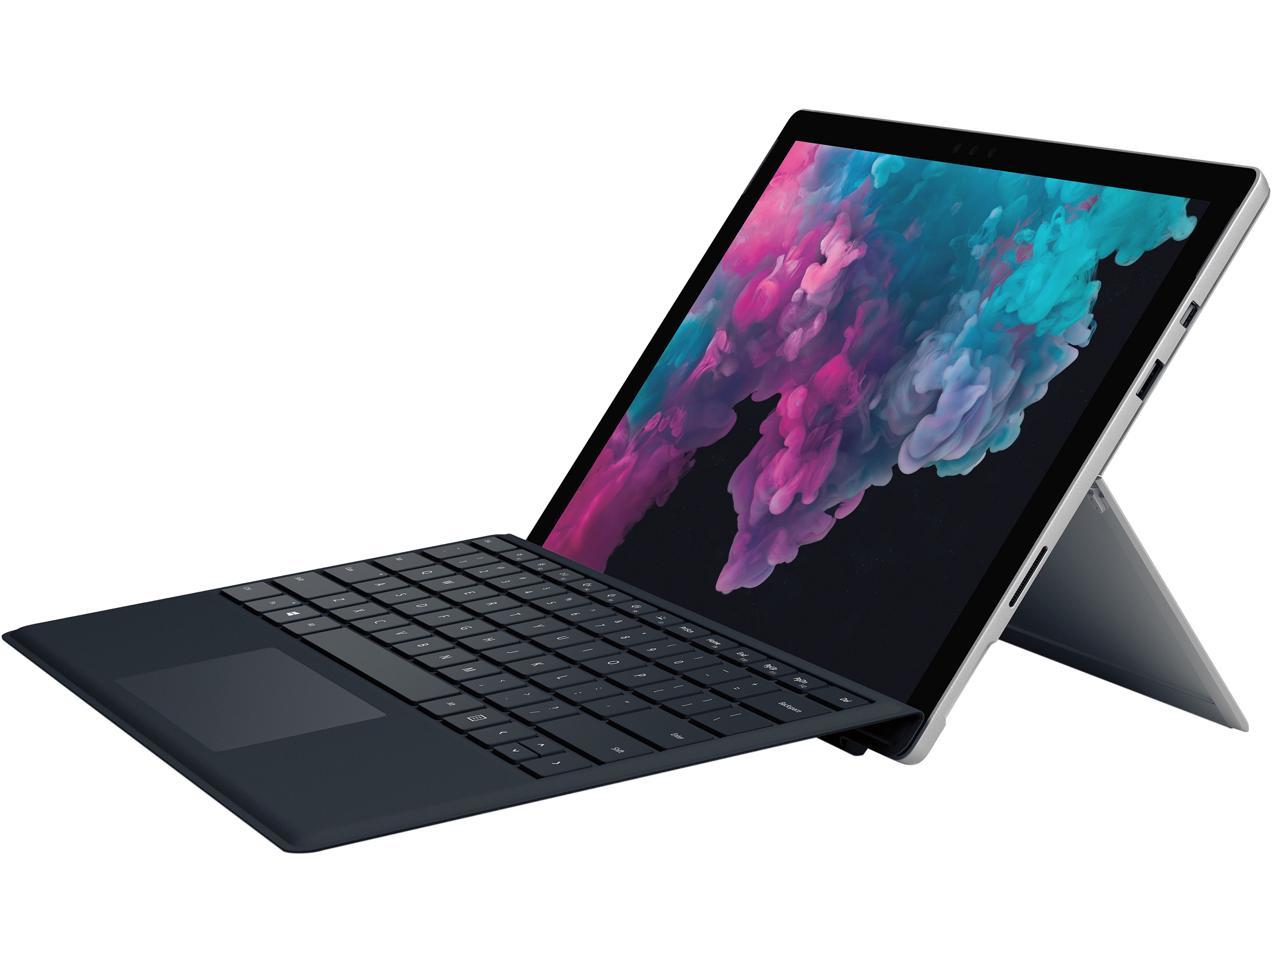 Microsoft Surface Pro 6 NKR-00001 2-in-1 Laptop Intel Core i5-8250U 1.